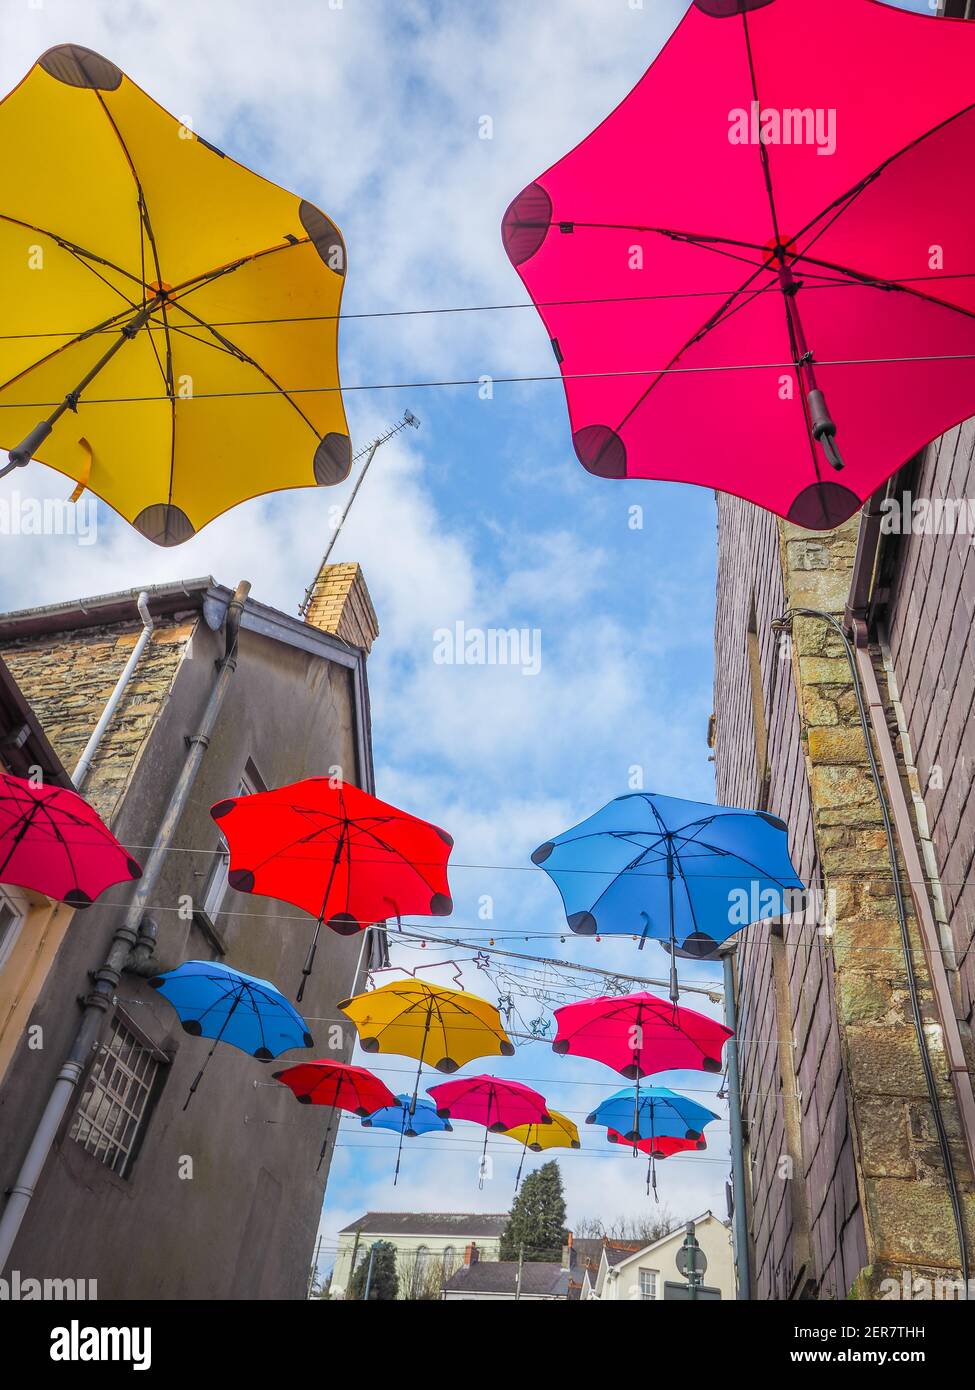 Brightly coloured umbrella art installation, Llandysul, Wales Stock Photo